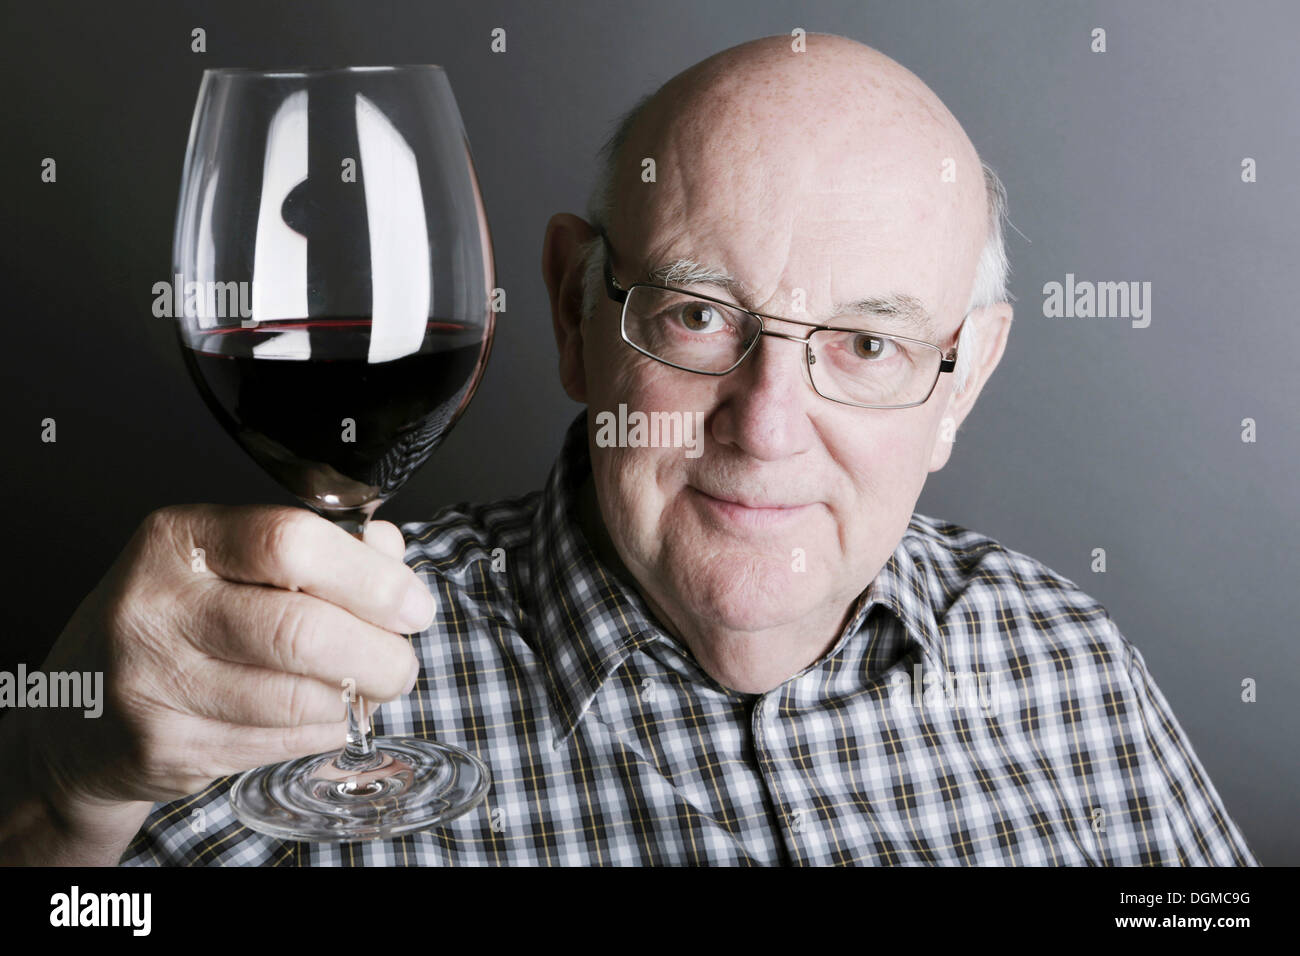 Senior citizen, elderly man, with a glass of wine Stock Photo